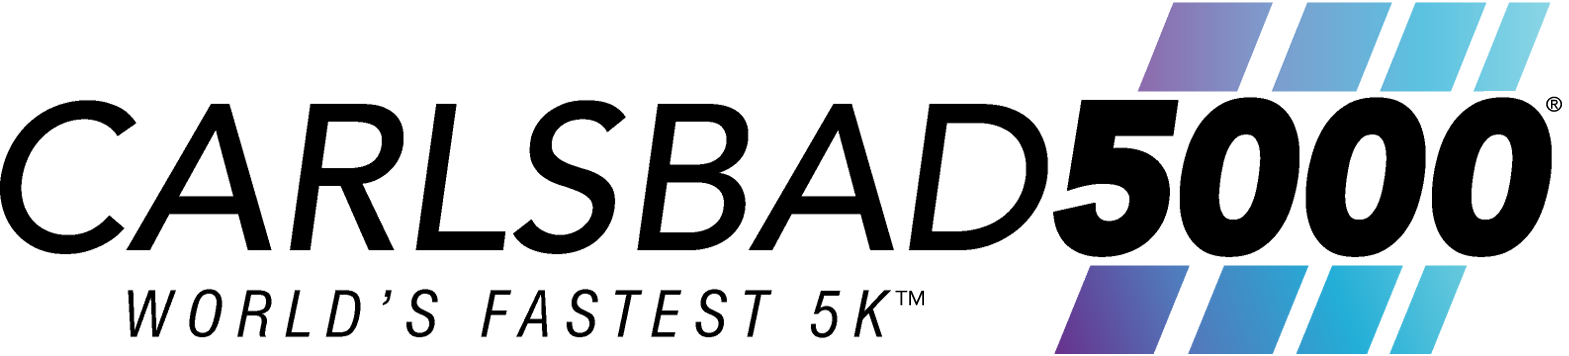 Carlsbad 5000 logo on RaceRaves